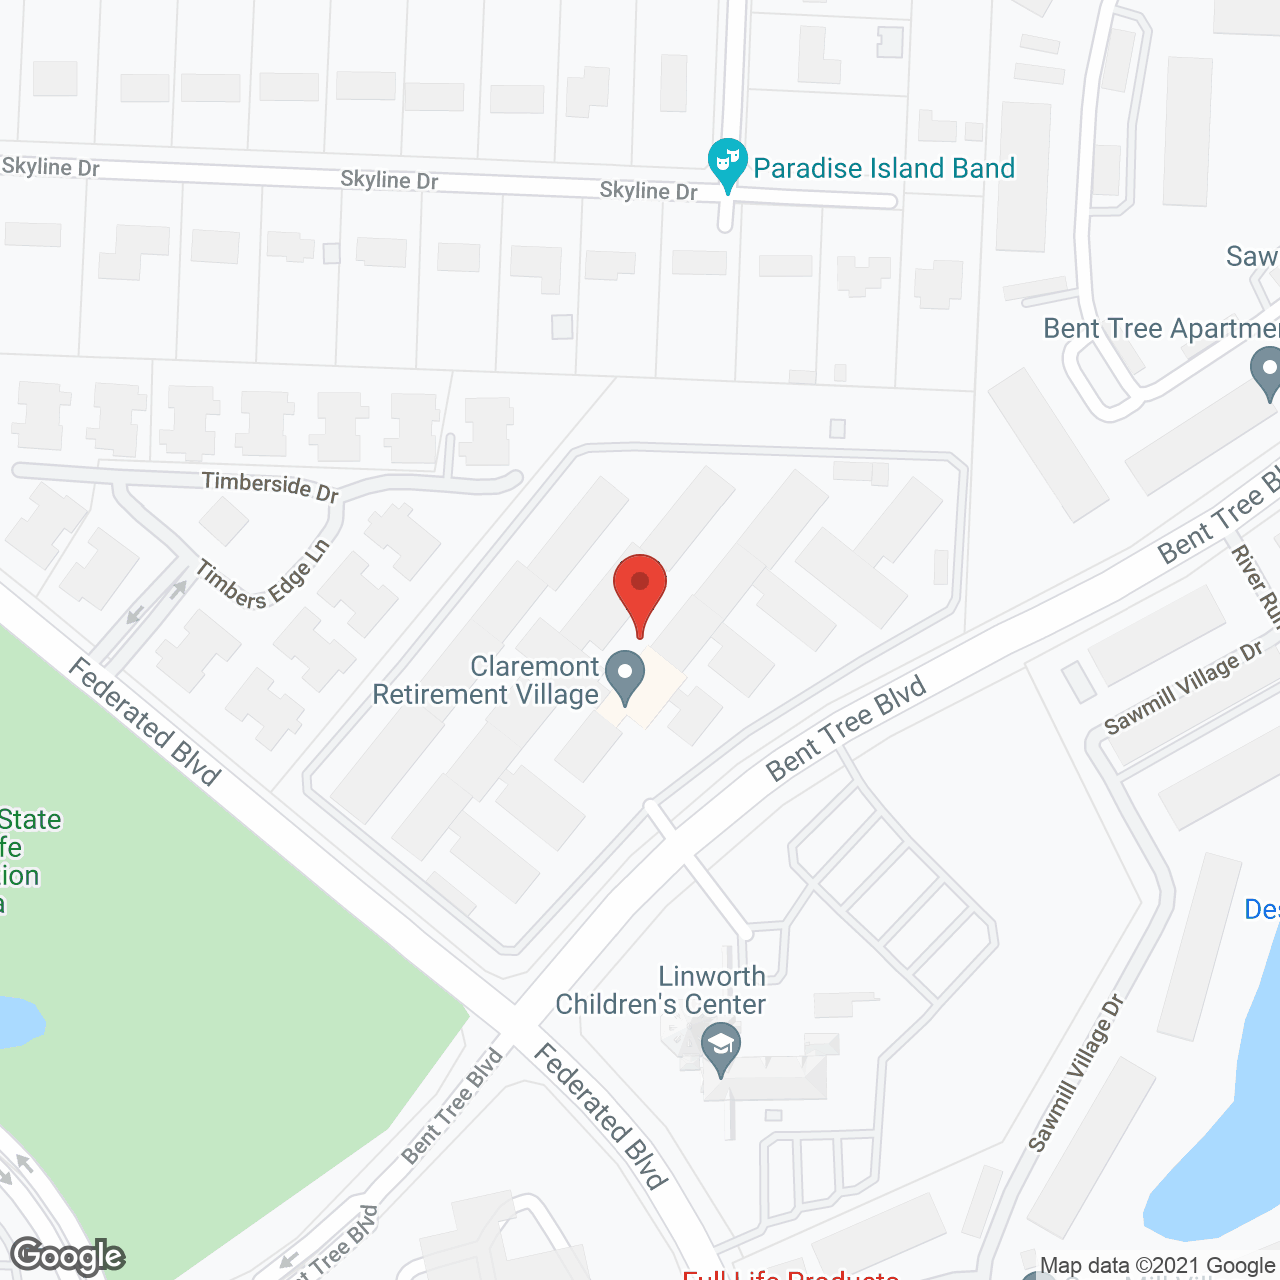 Claremont Retirement Village in google map